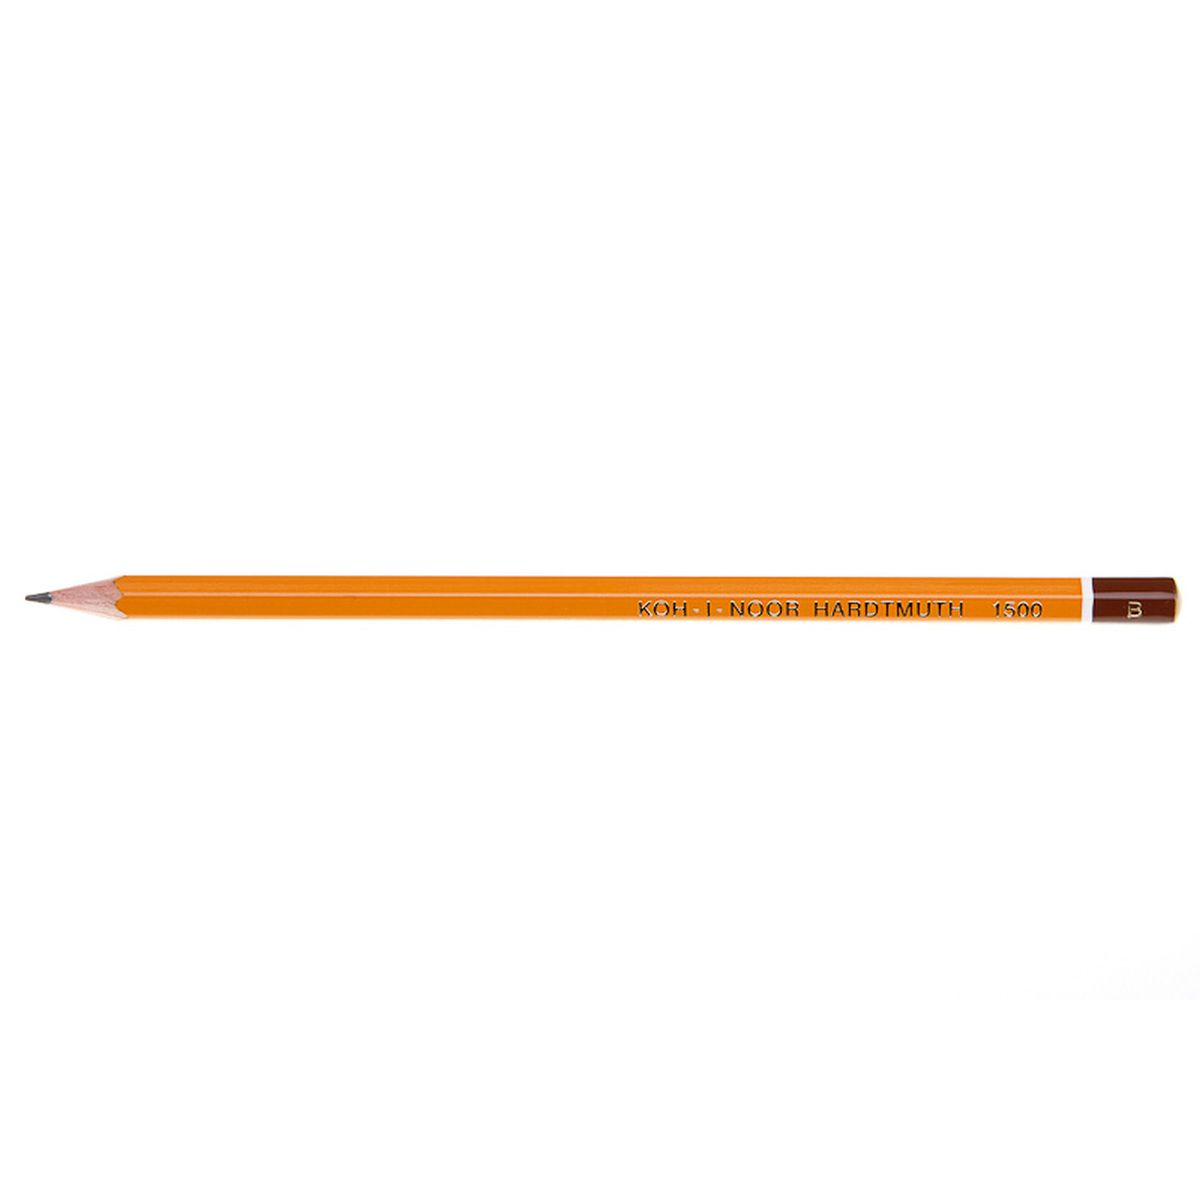 Ołówek Koh-I-Noor 1500 B